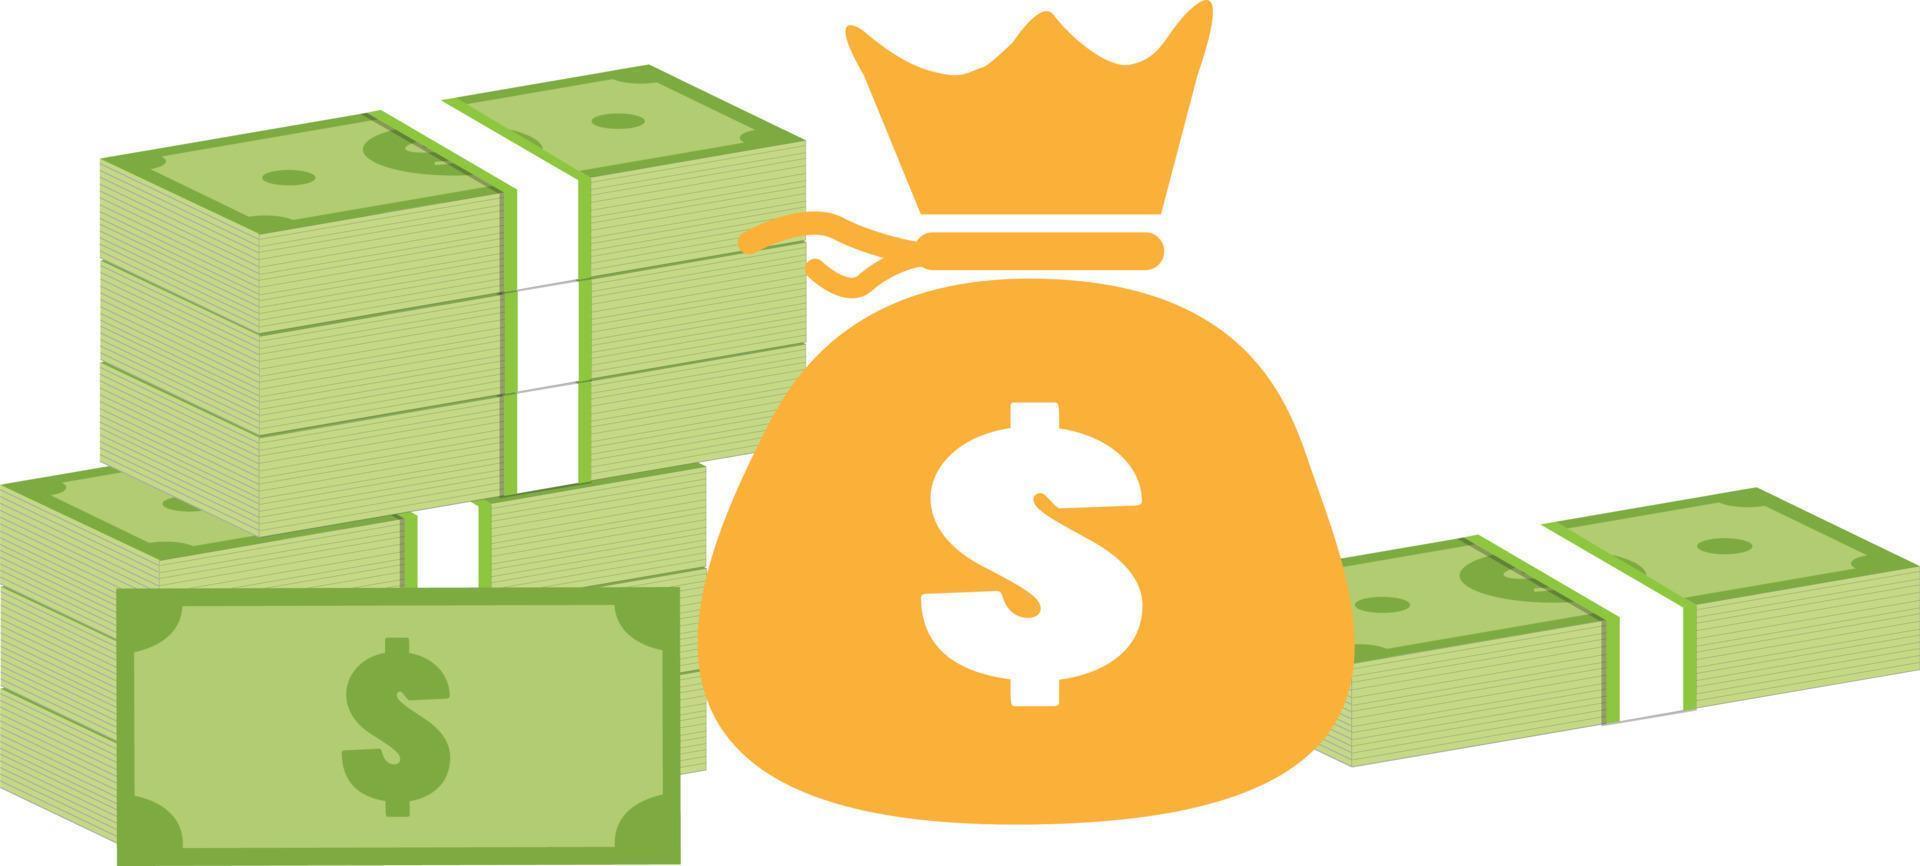 money icon. flat style. dollars banknotes icon for your web site design, logo, app, UI. cash money bag symbol. sack money sign. vector